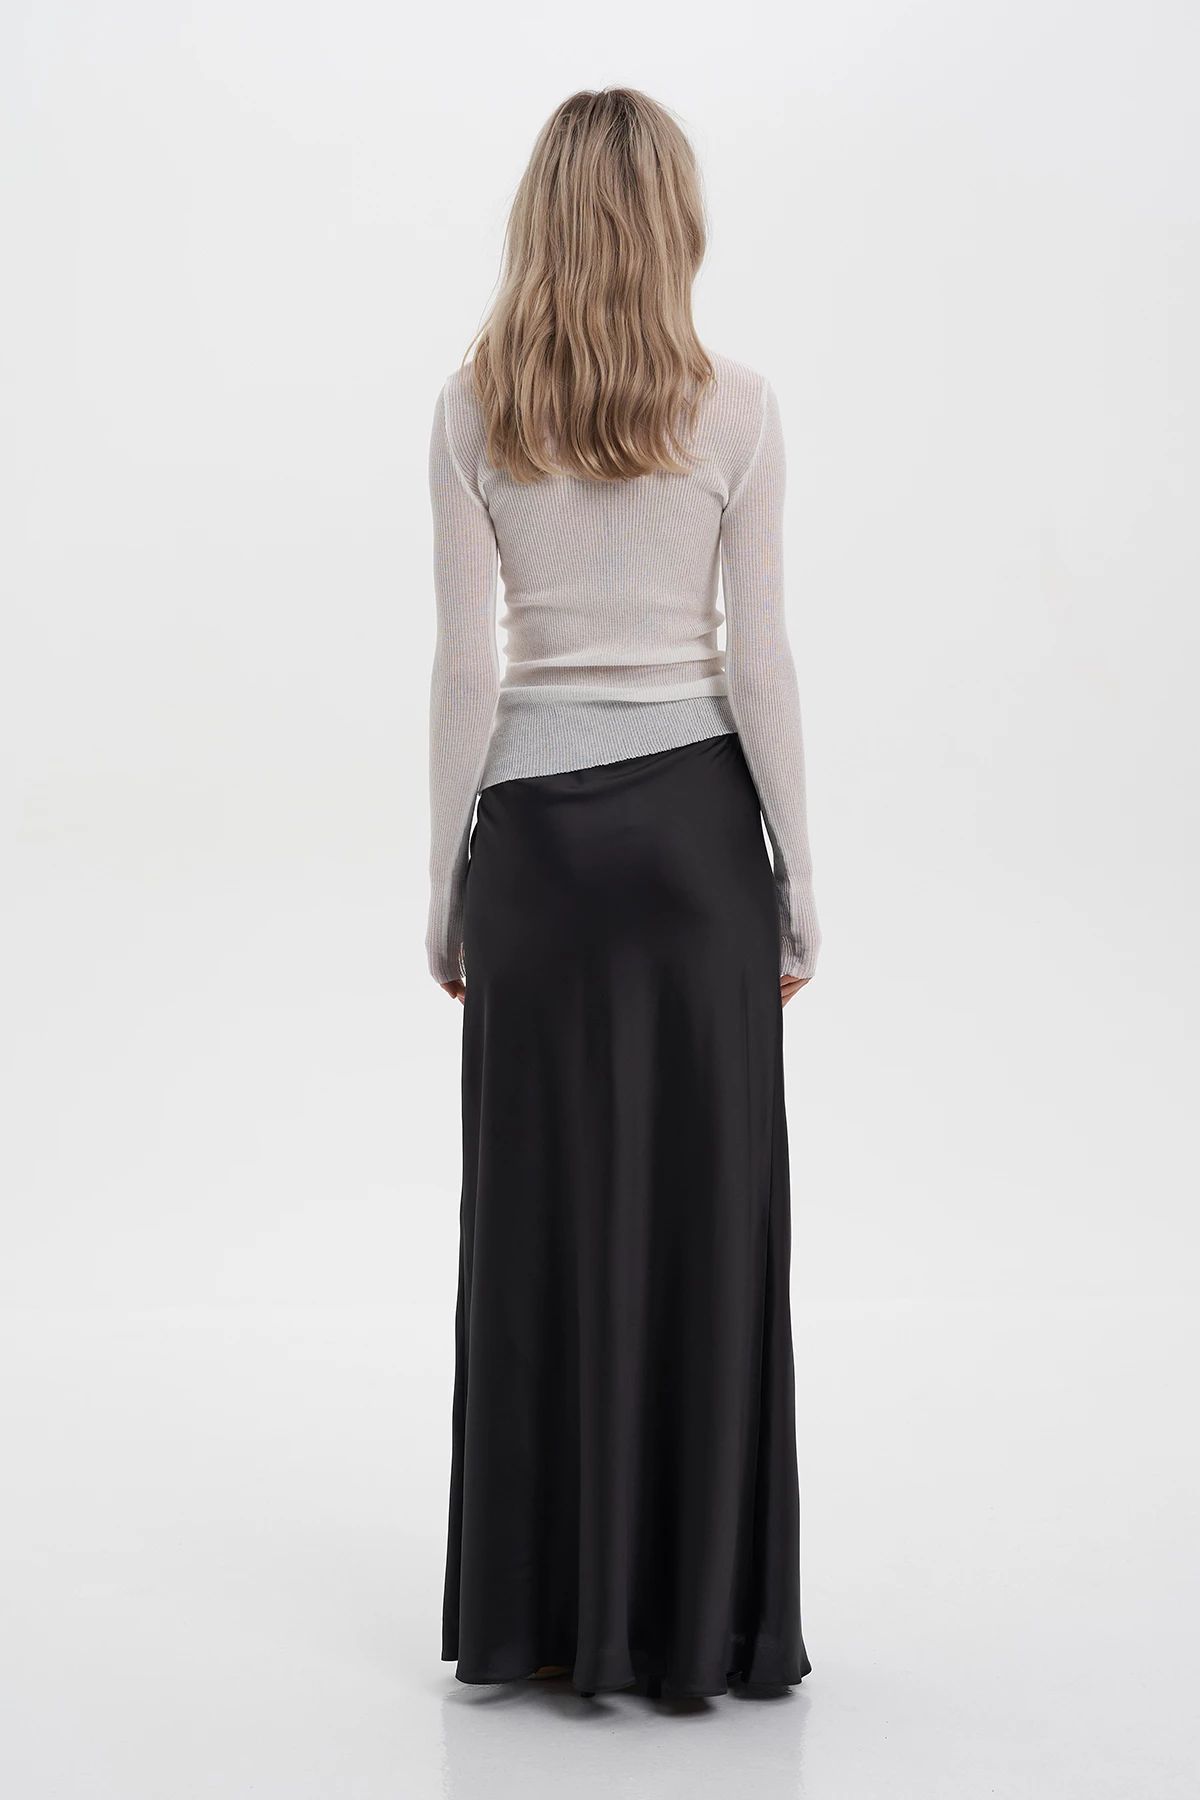 Black satin maxi skirt, photo 2